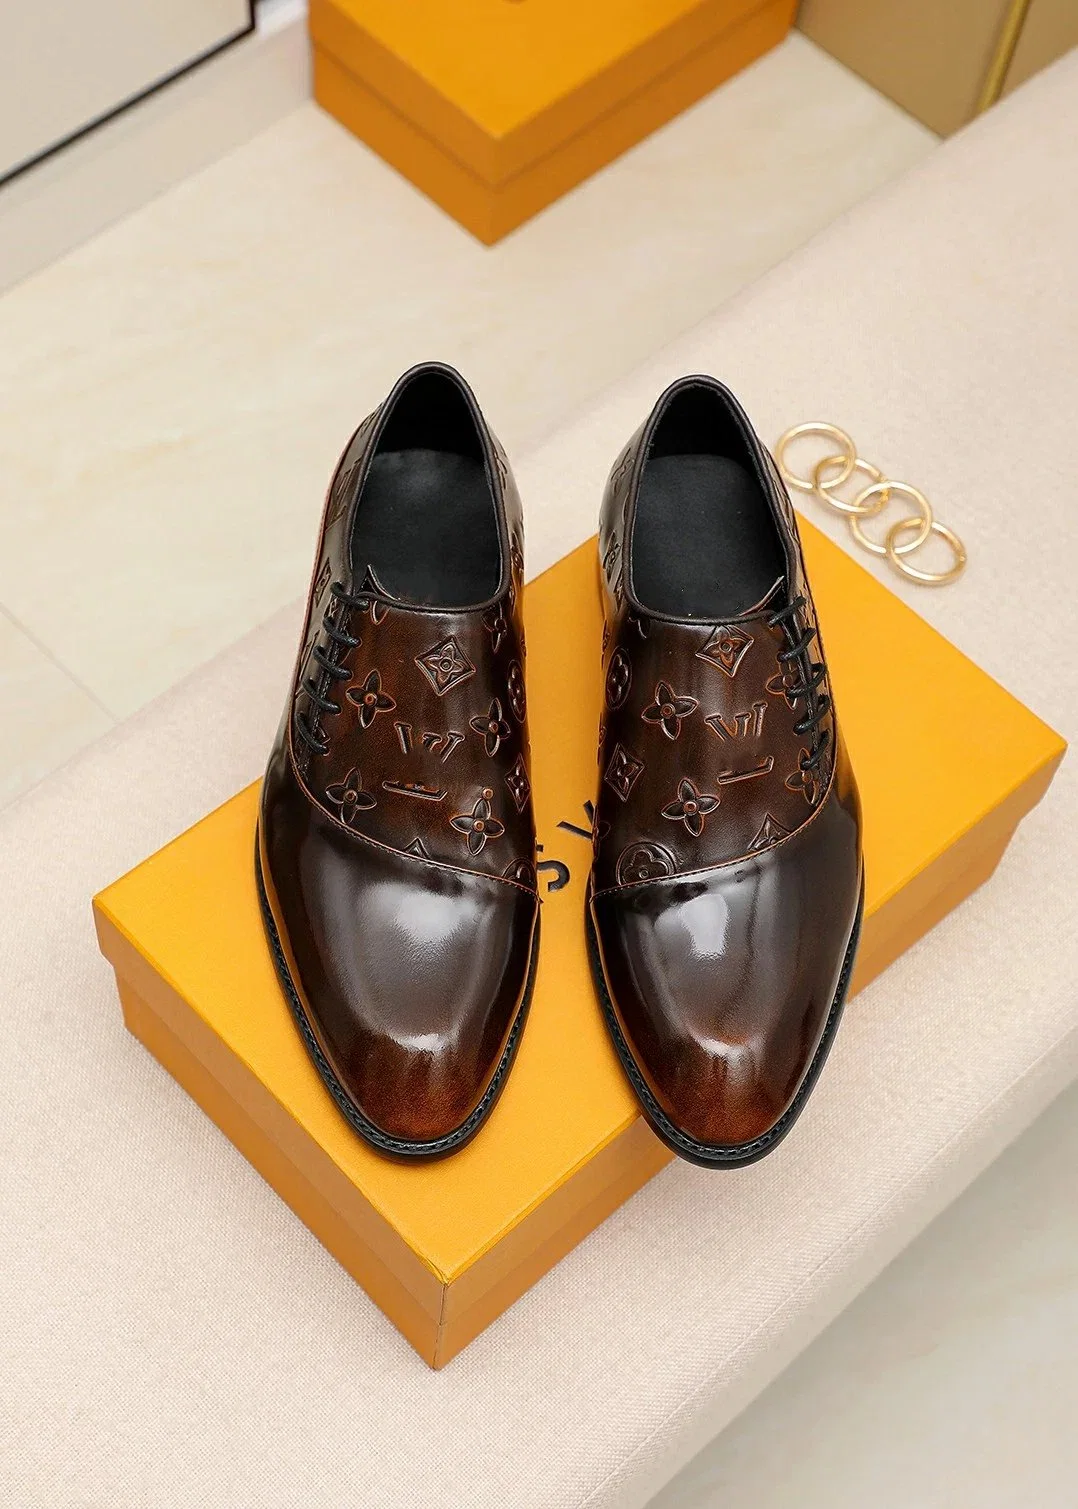 Wholesale/Supplier High-End Balenciag'a's Shoes Designer Business Formal Leather Shoes Gucc'i's Shoes